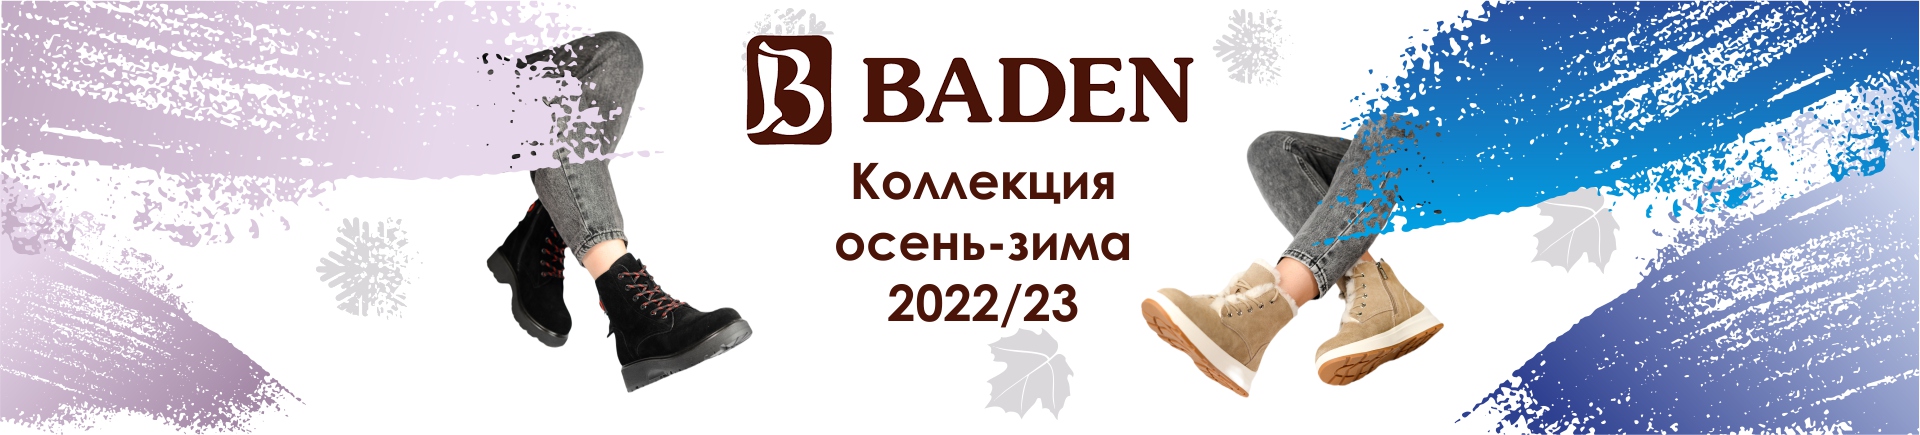 https://robek-opt.ru/brand/27-baden/?p1=1840&p2=5120&fseason=2,1